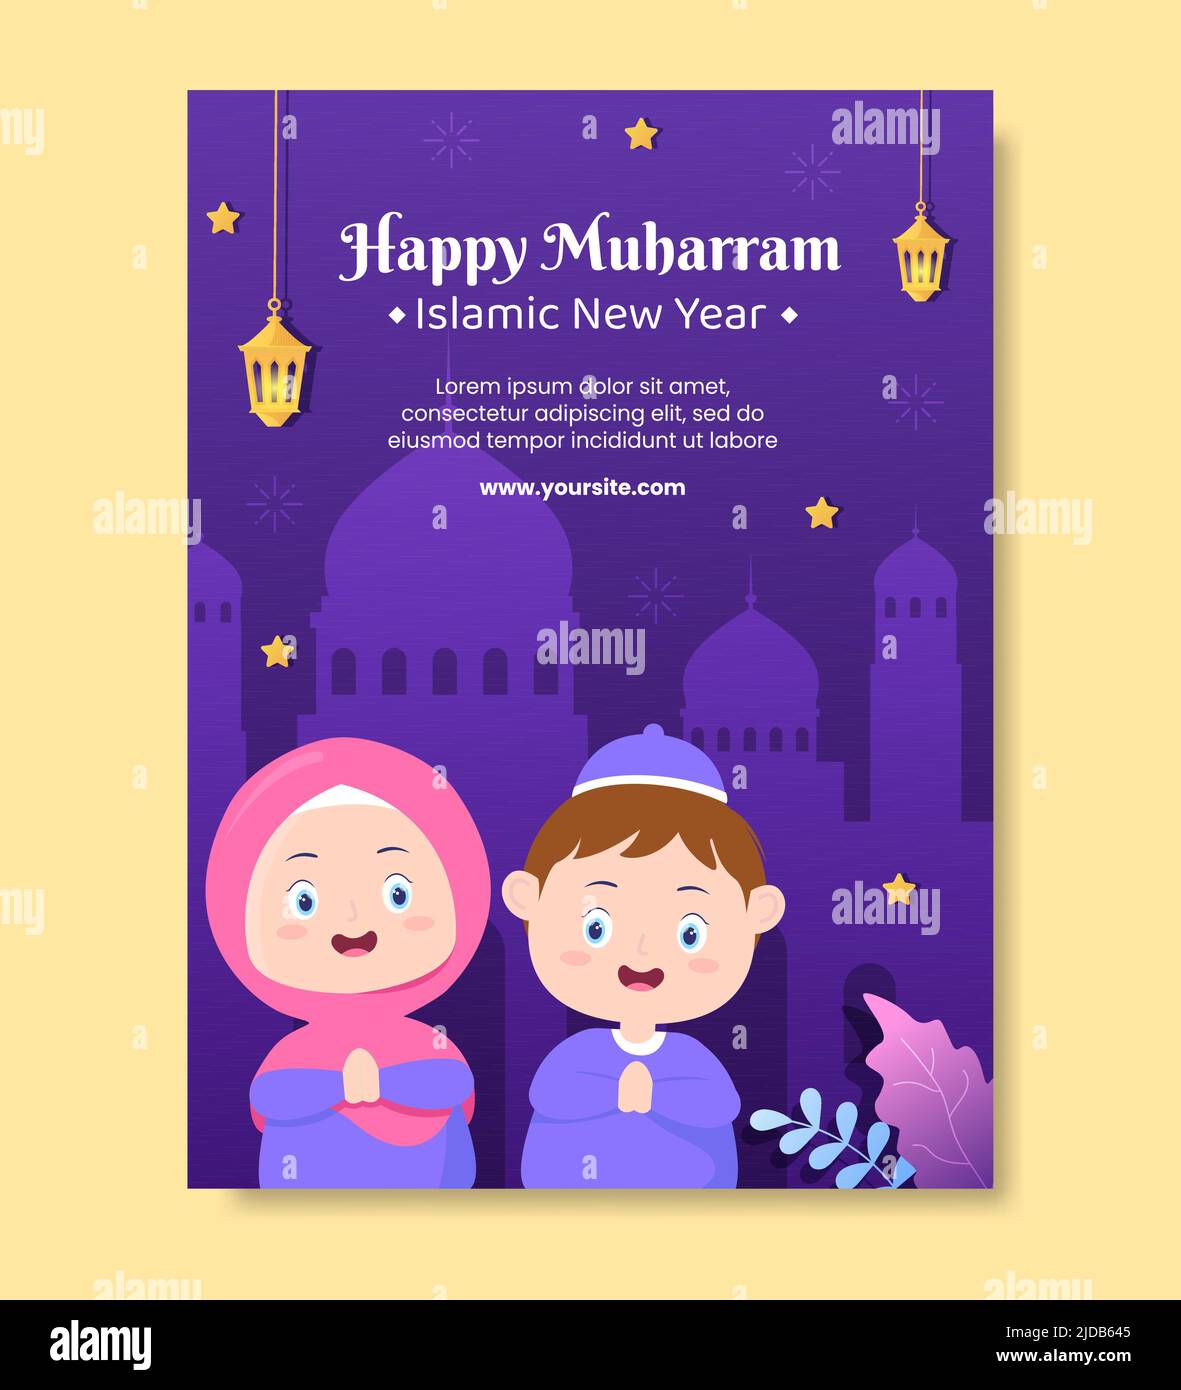 Islamic New Year Day or 1 Muharram Social Media Poster Template ...